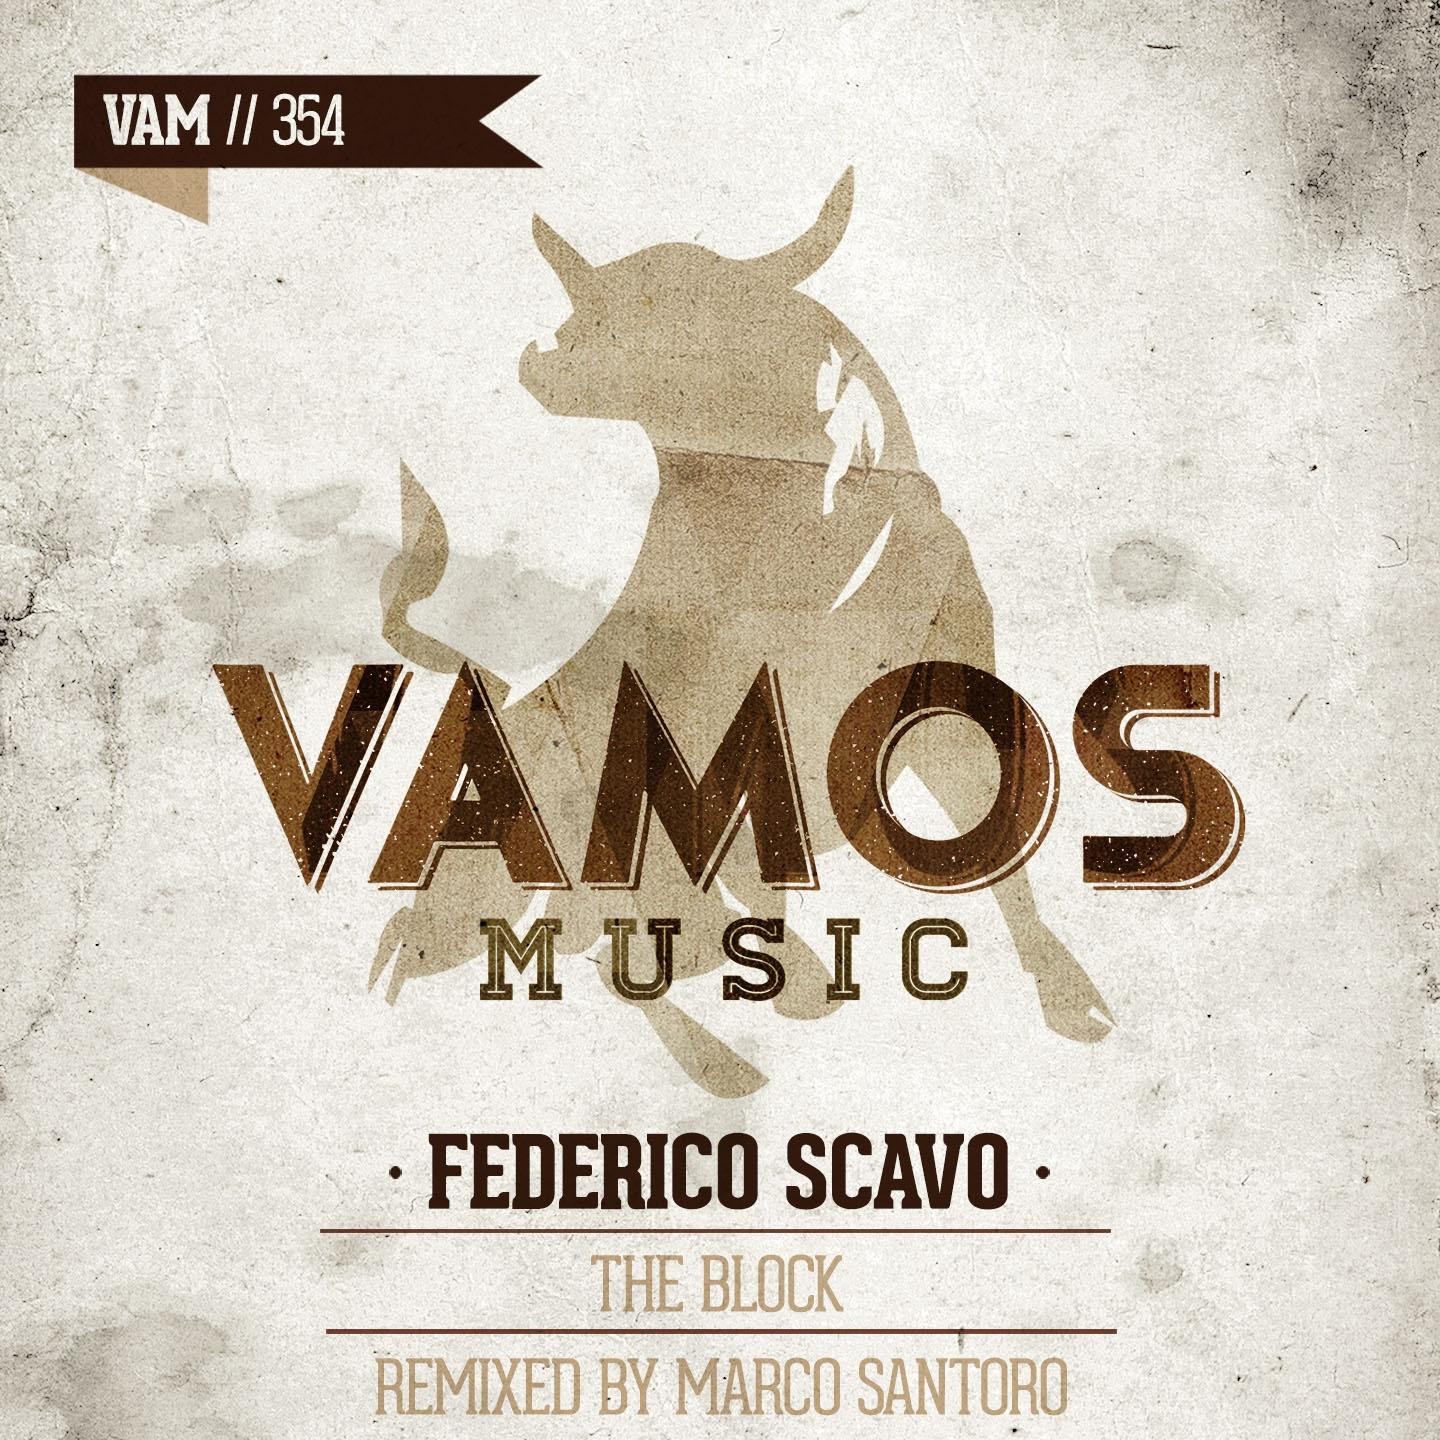 The Block (Marco Santoro Remix)